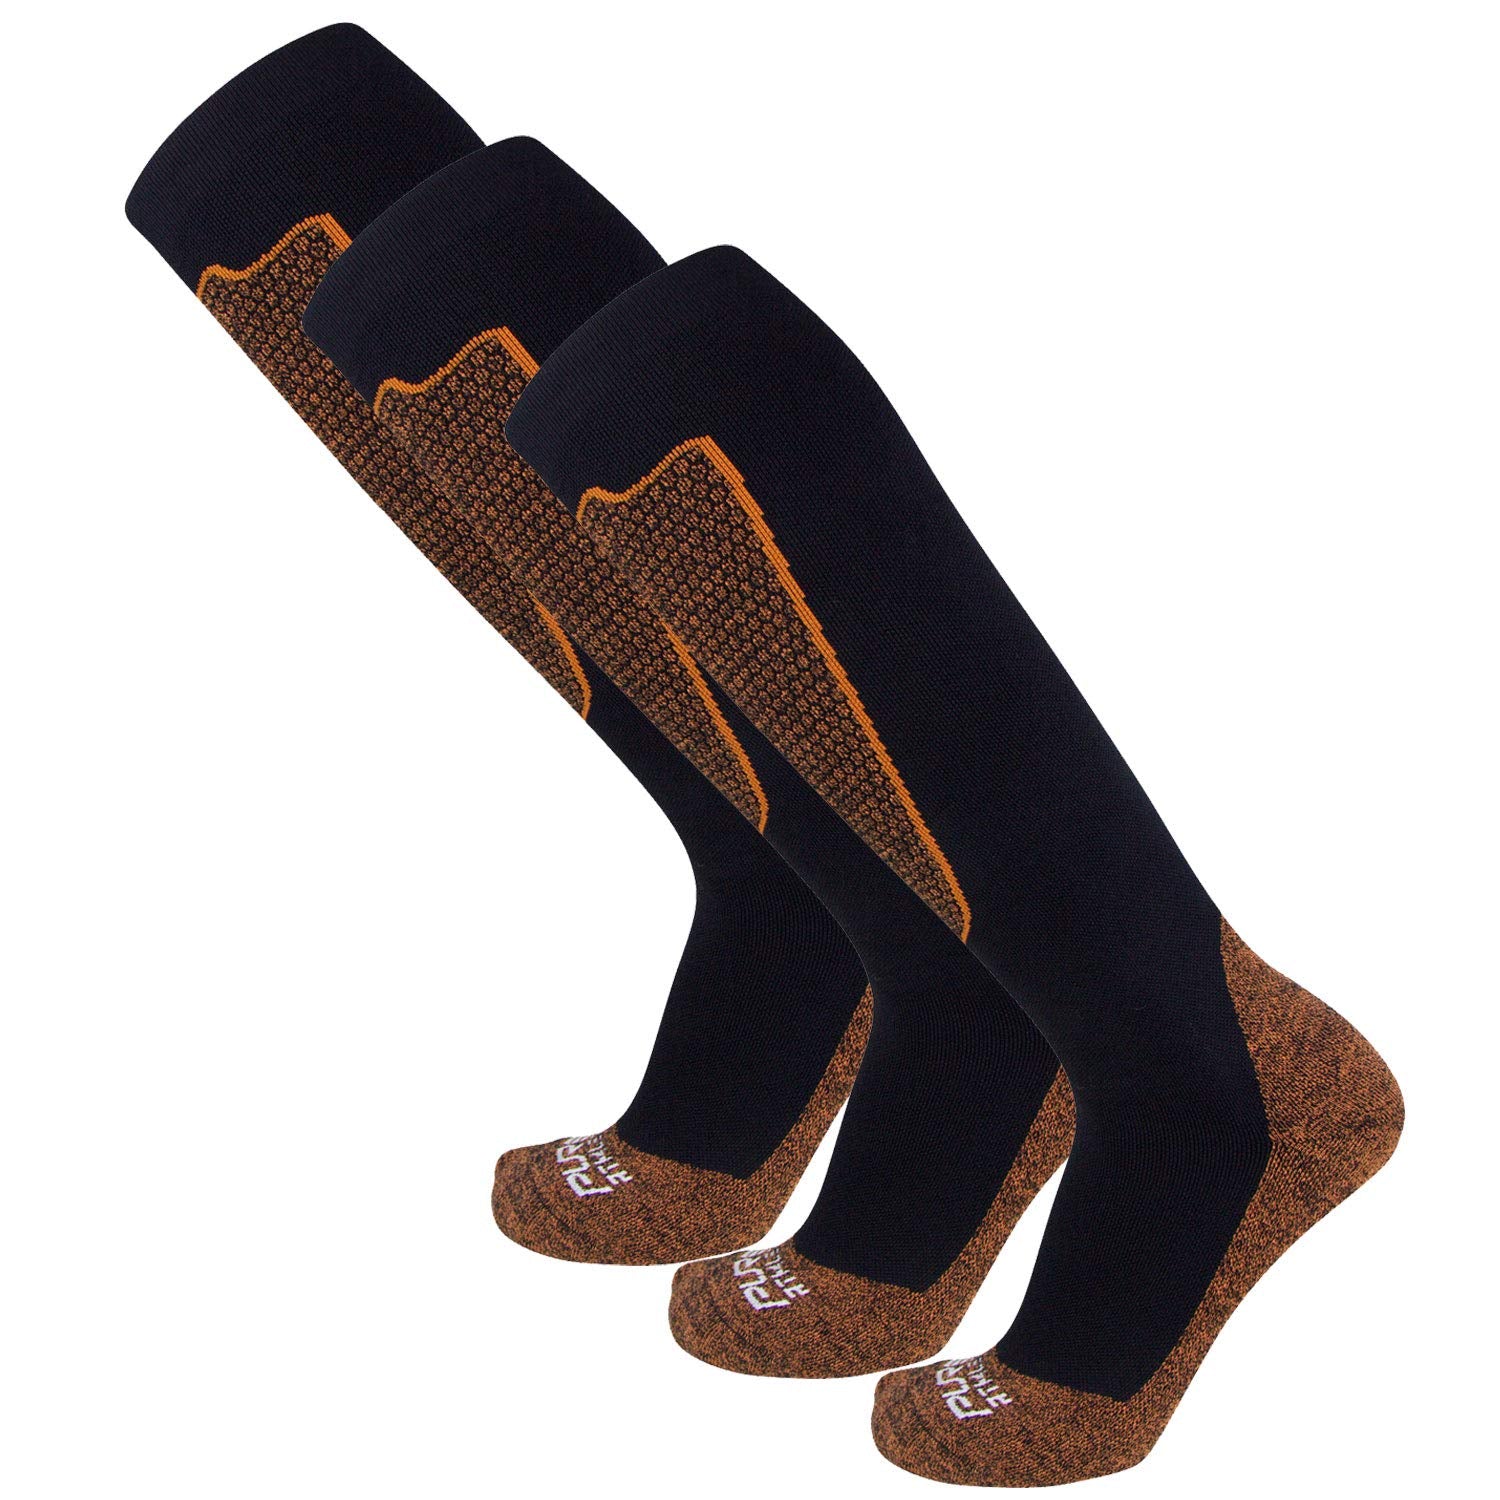 Copper Compression Ski Socks